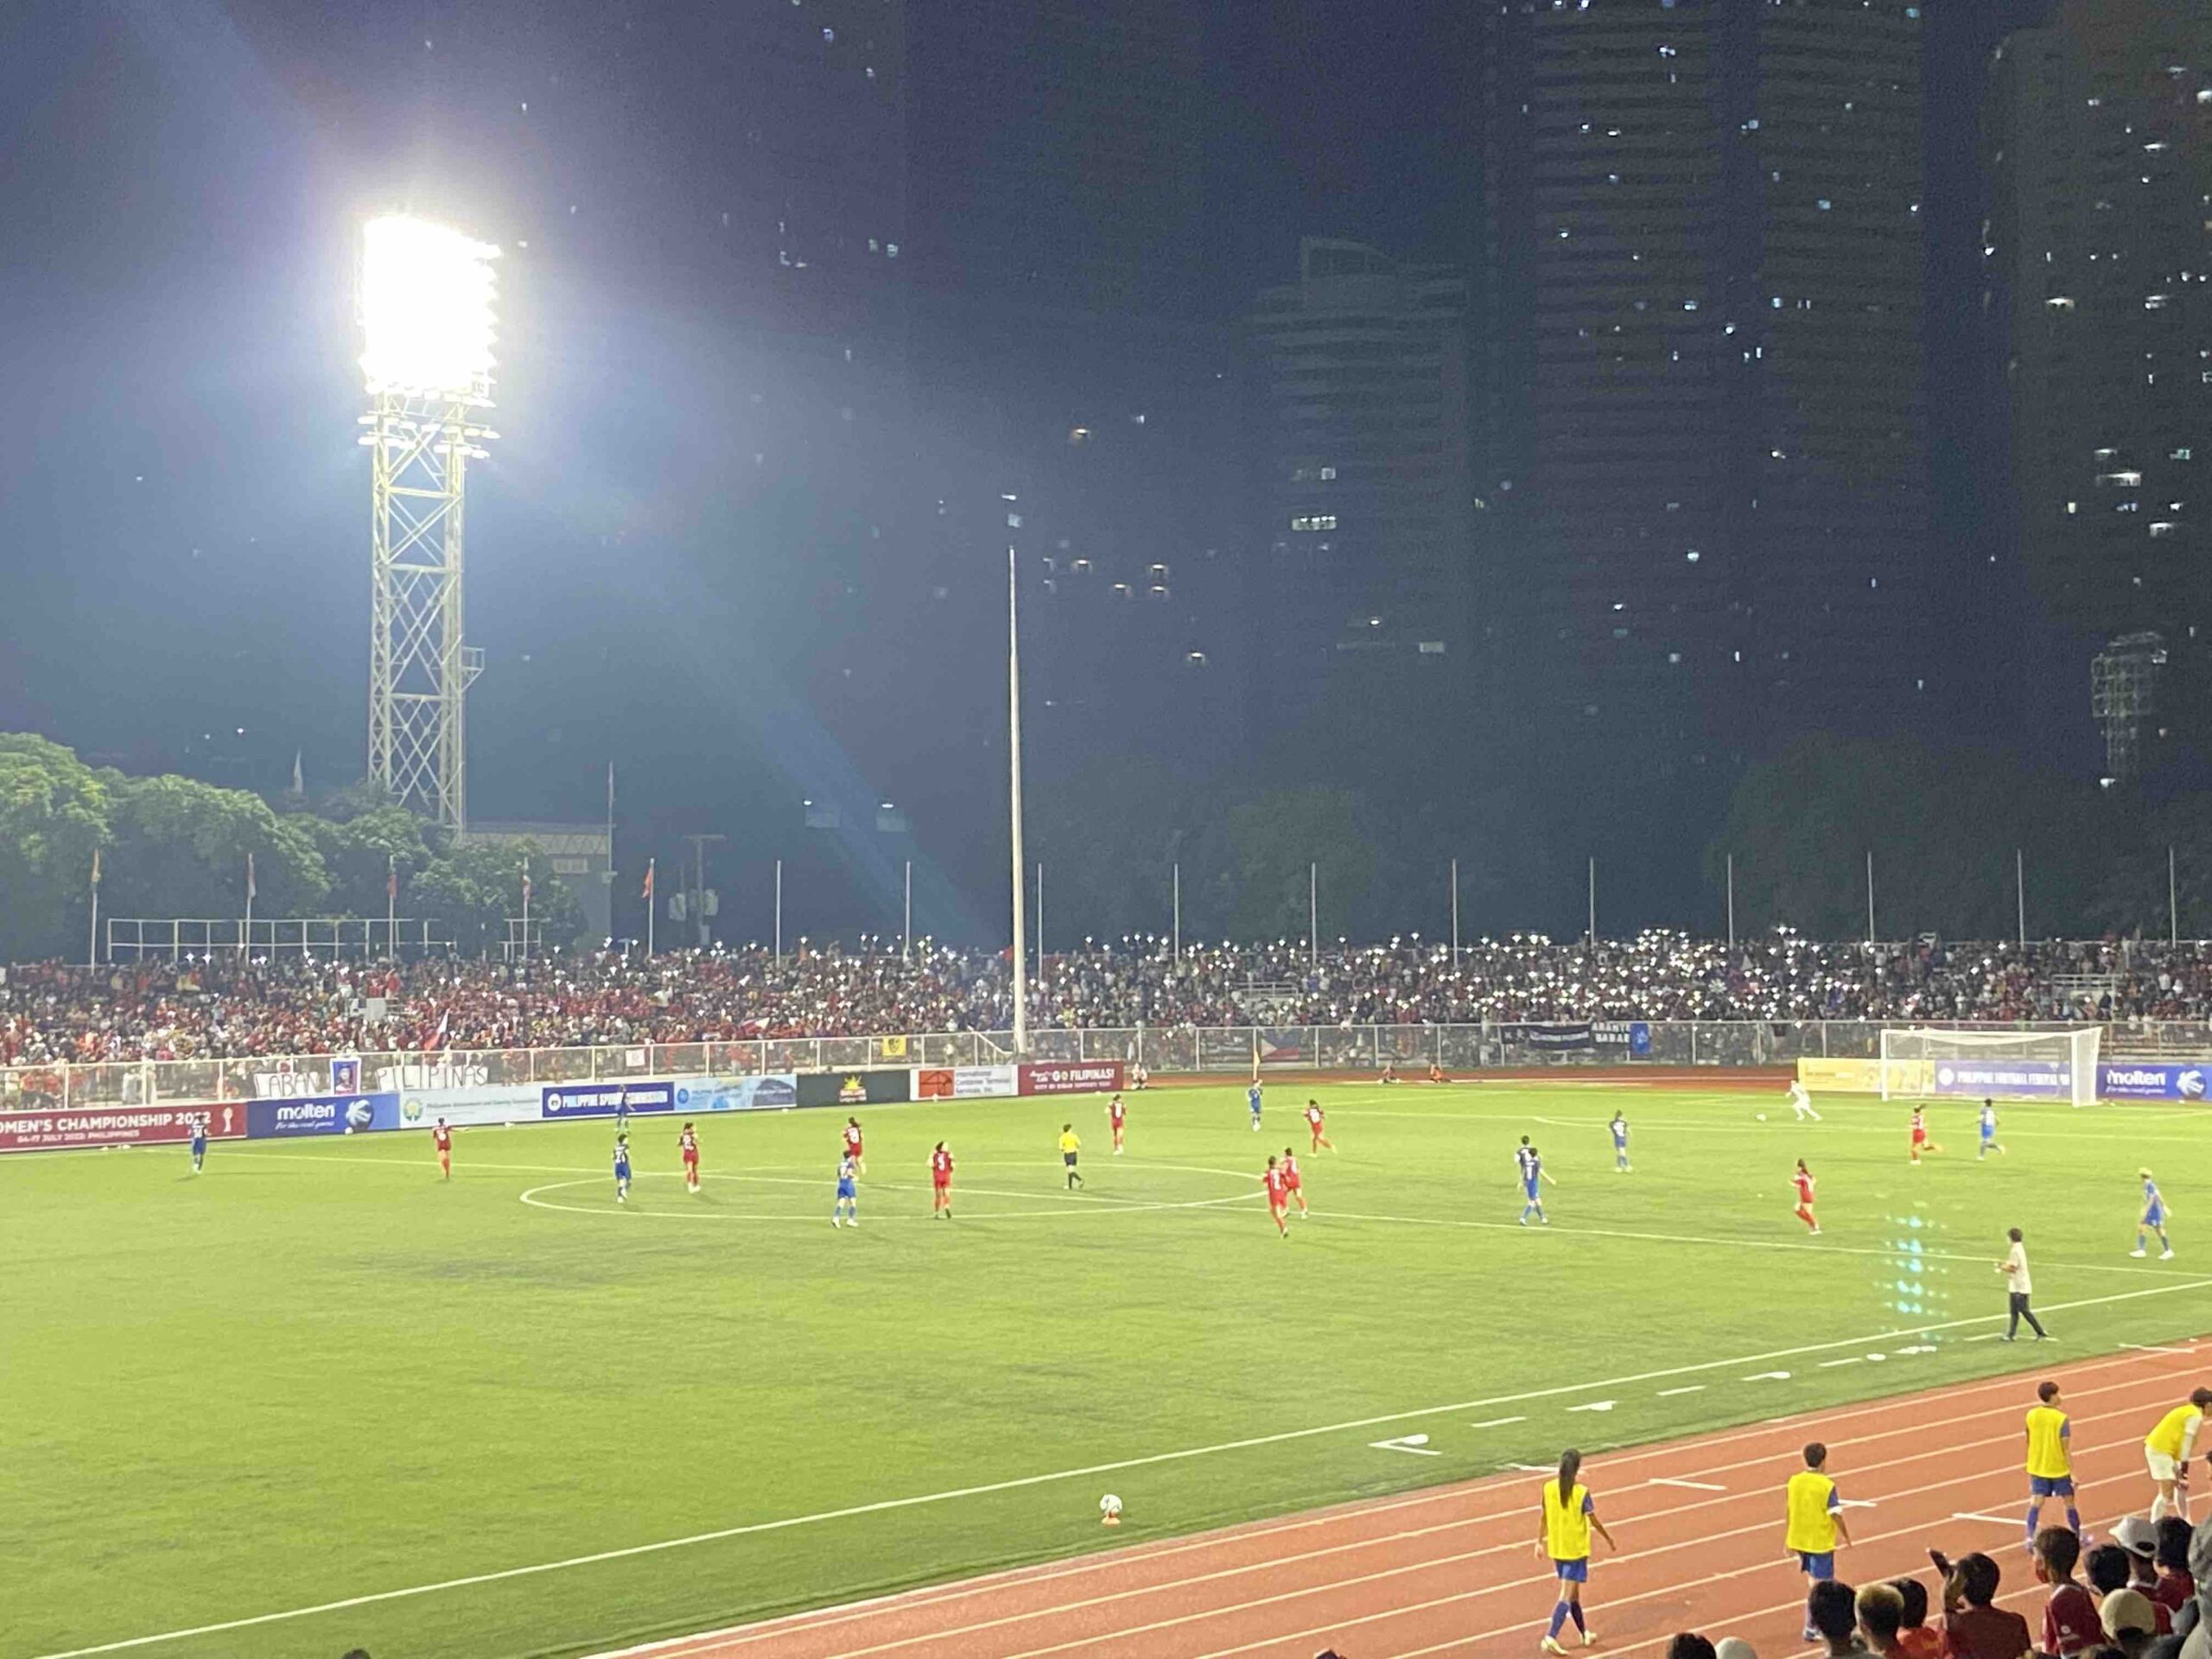 Filipinas supporters lighting up the stadium